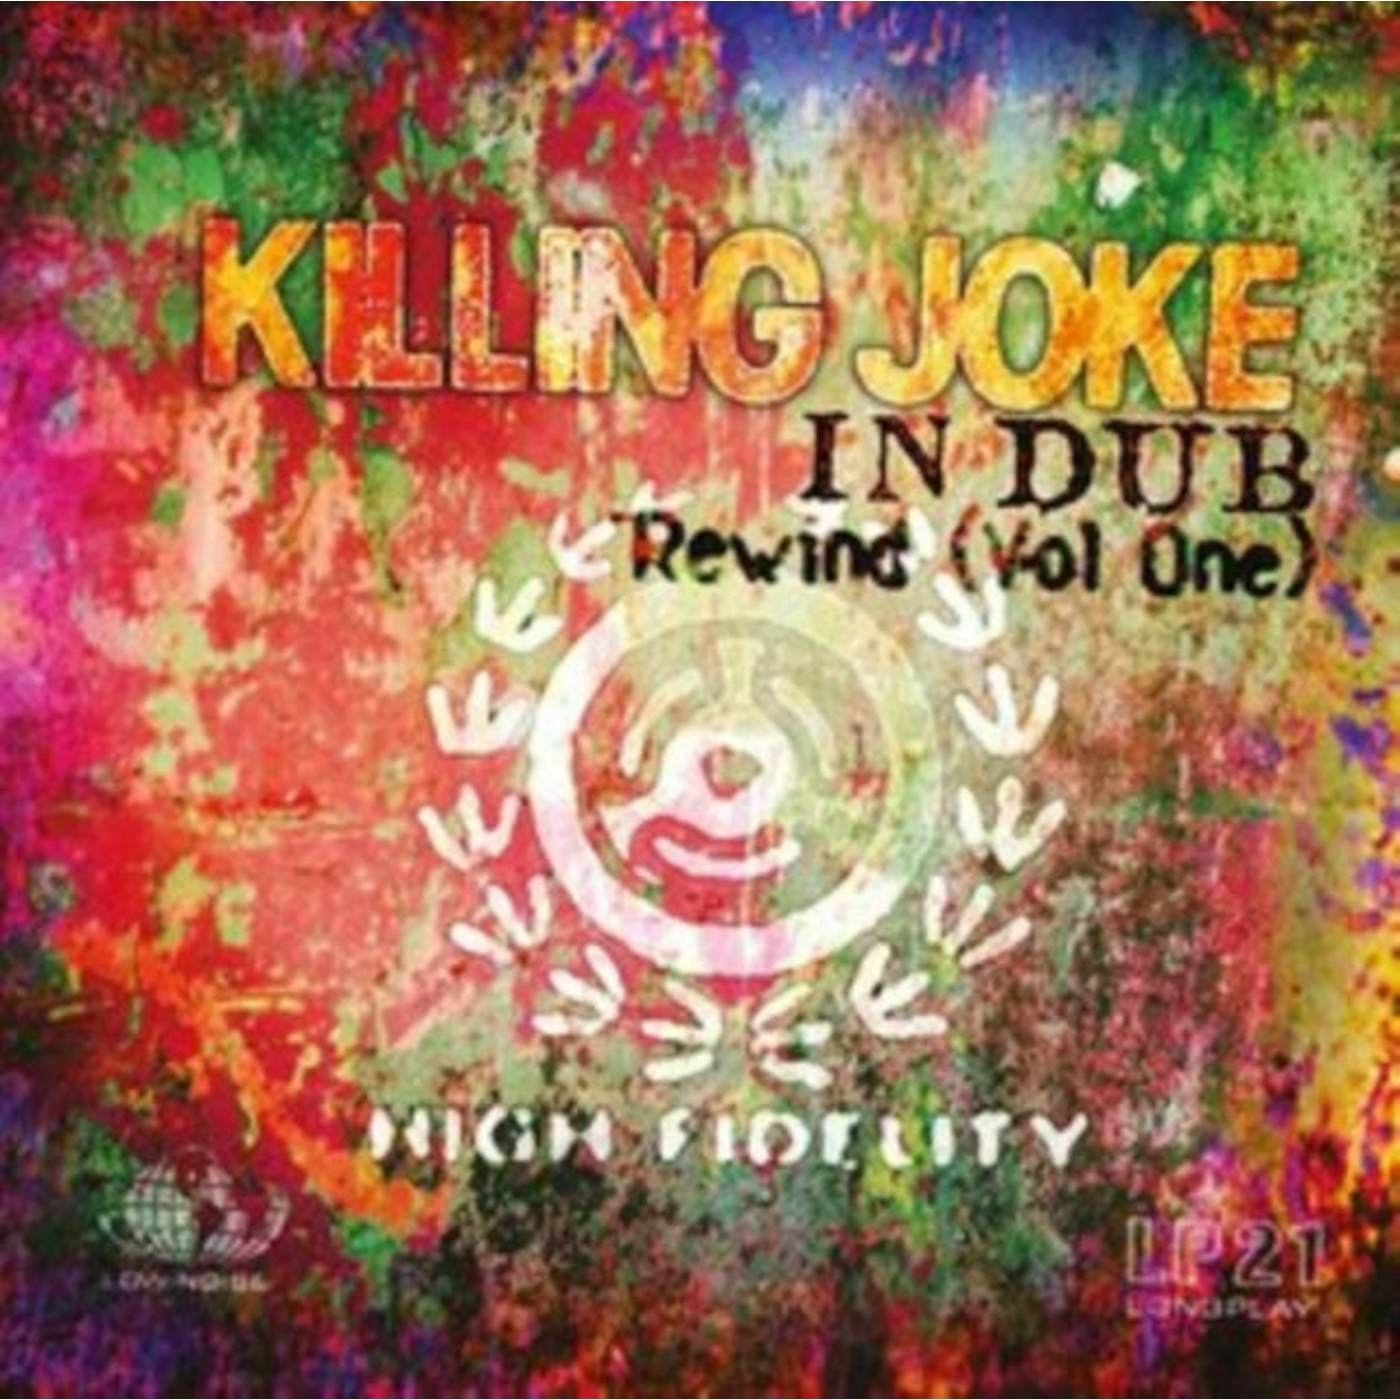 Killing Joke LP - In Dub Rewind - Vol One (2lp) (Vinyl)